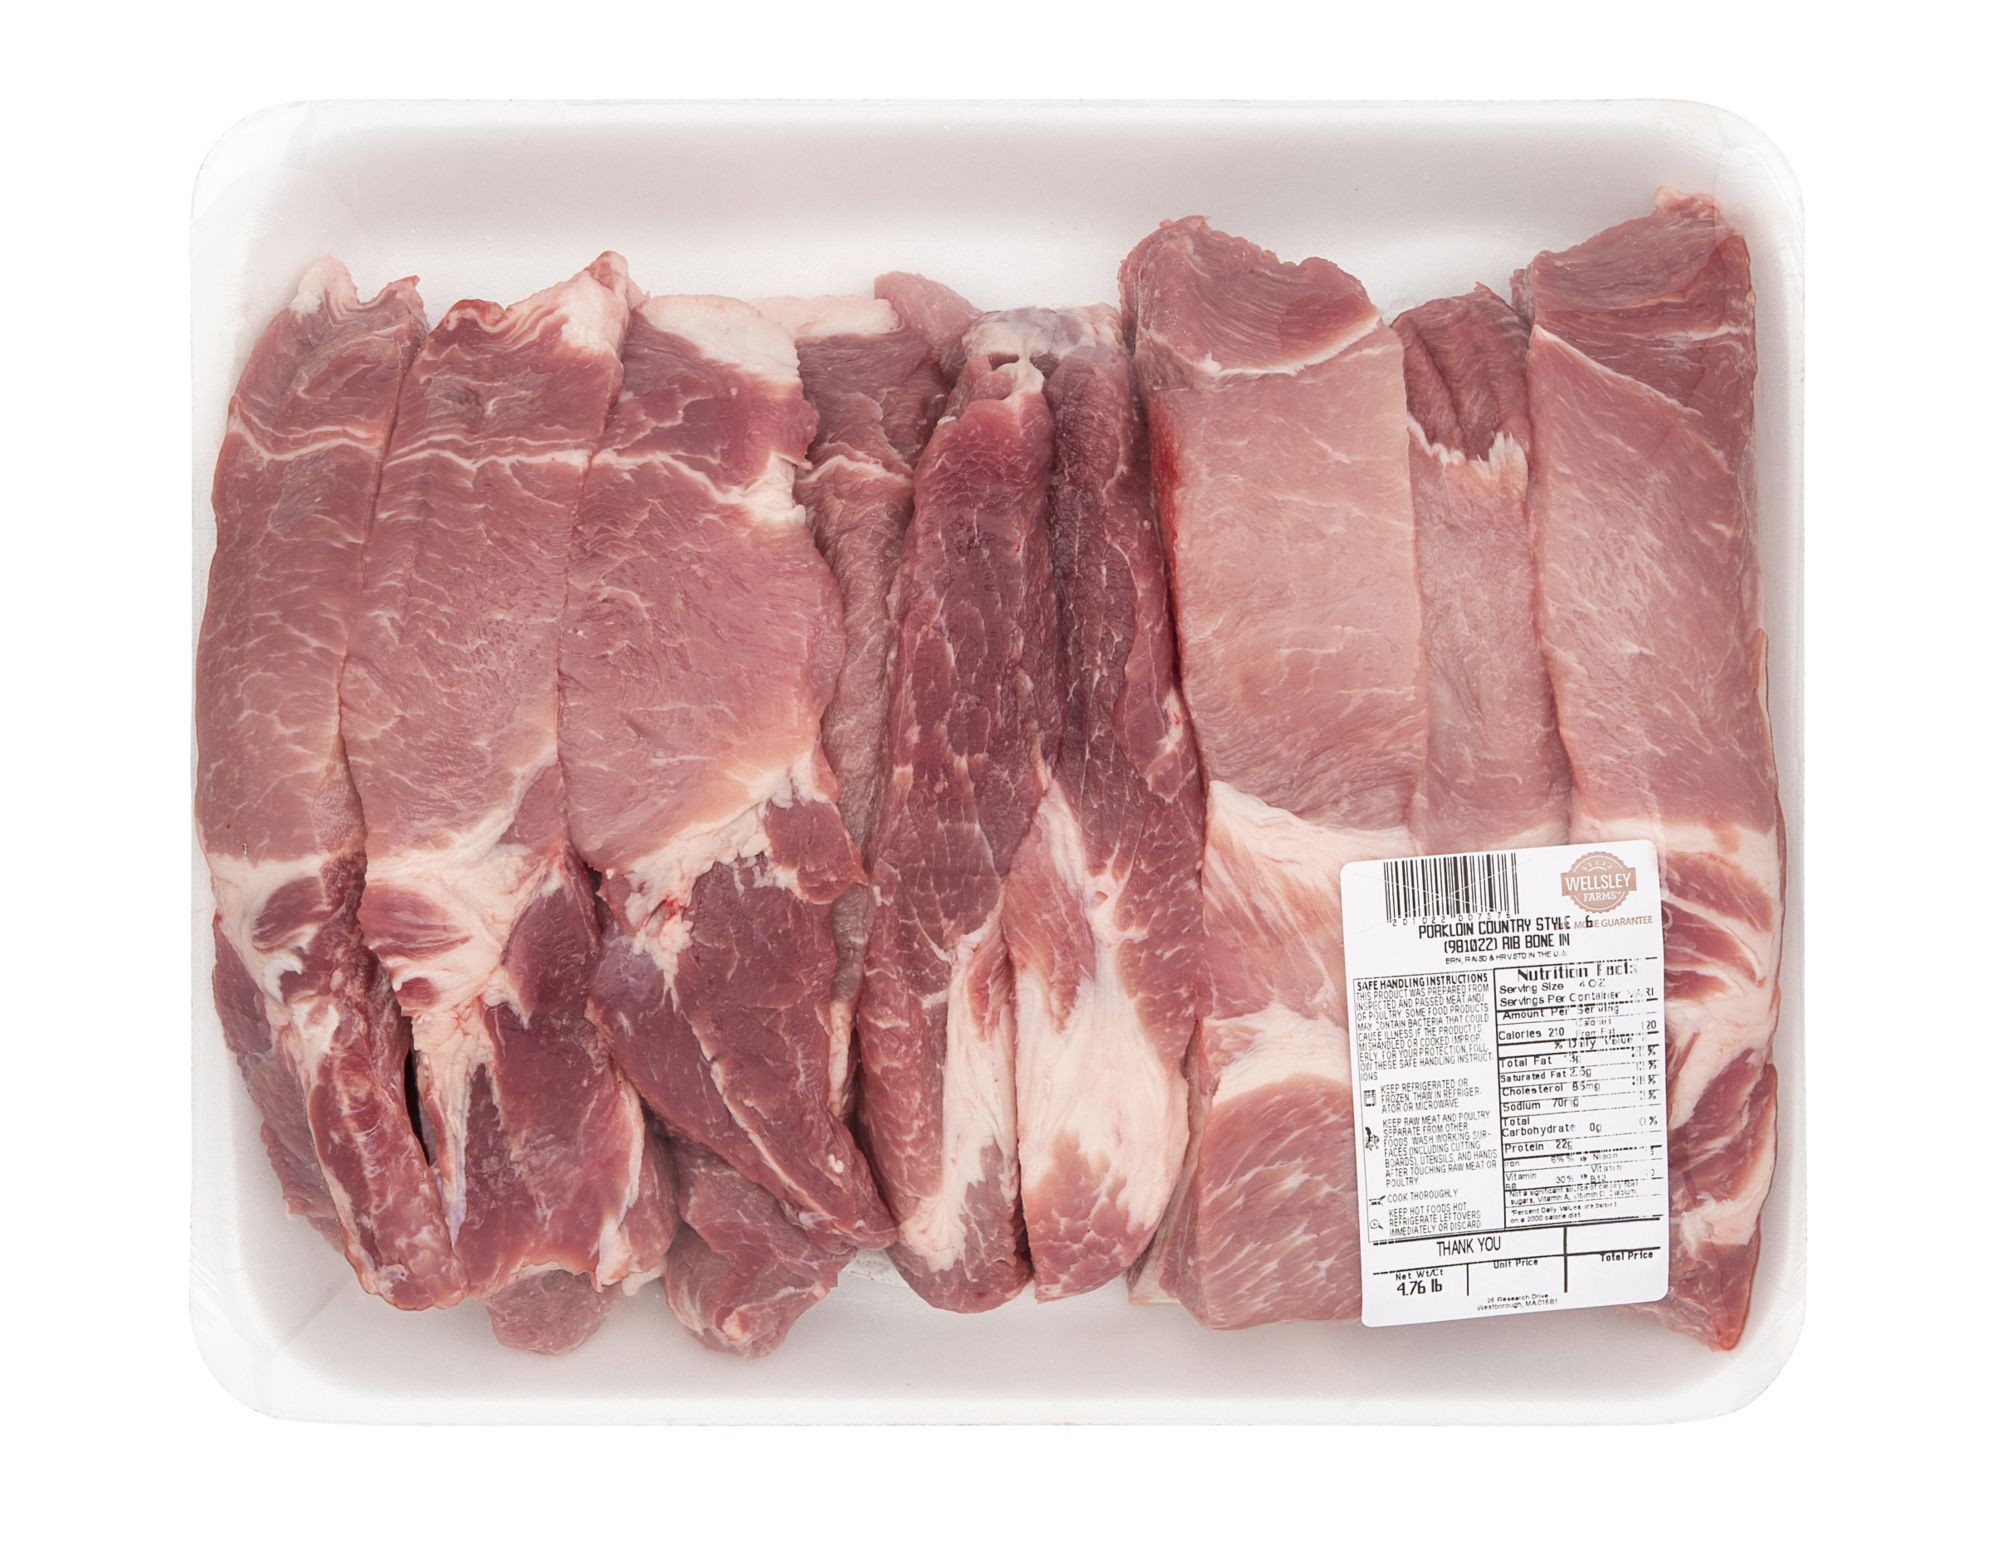 Wellsley Farms Fresh Pork Loin Bone-In Country Style Ribs,  3.75-4.5 lb